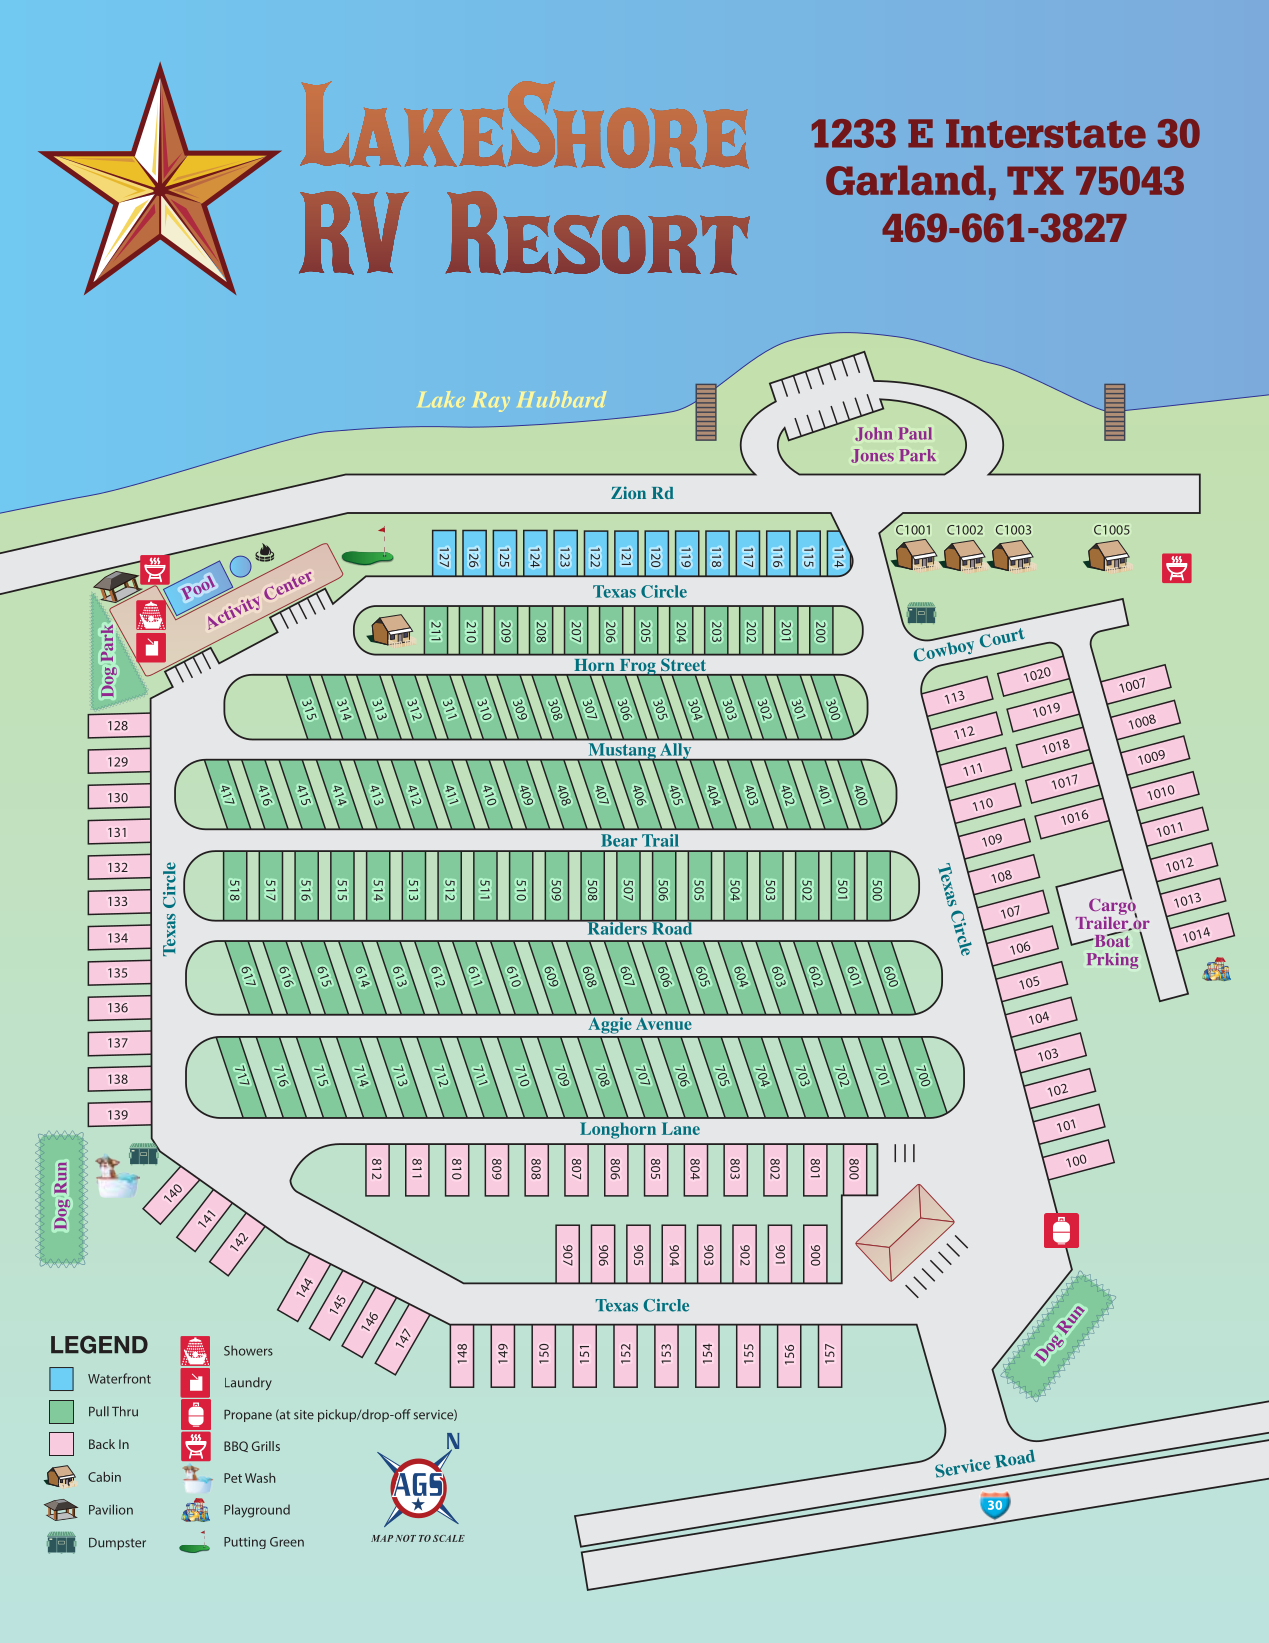 LakeShore RV Resort site map